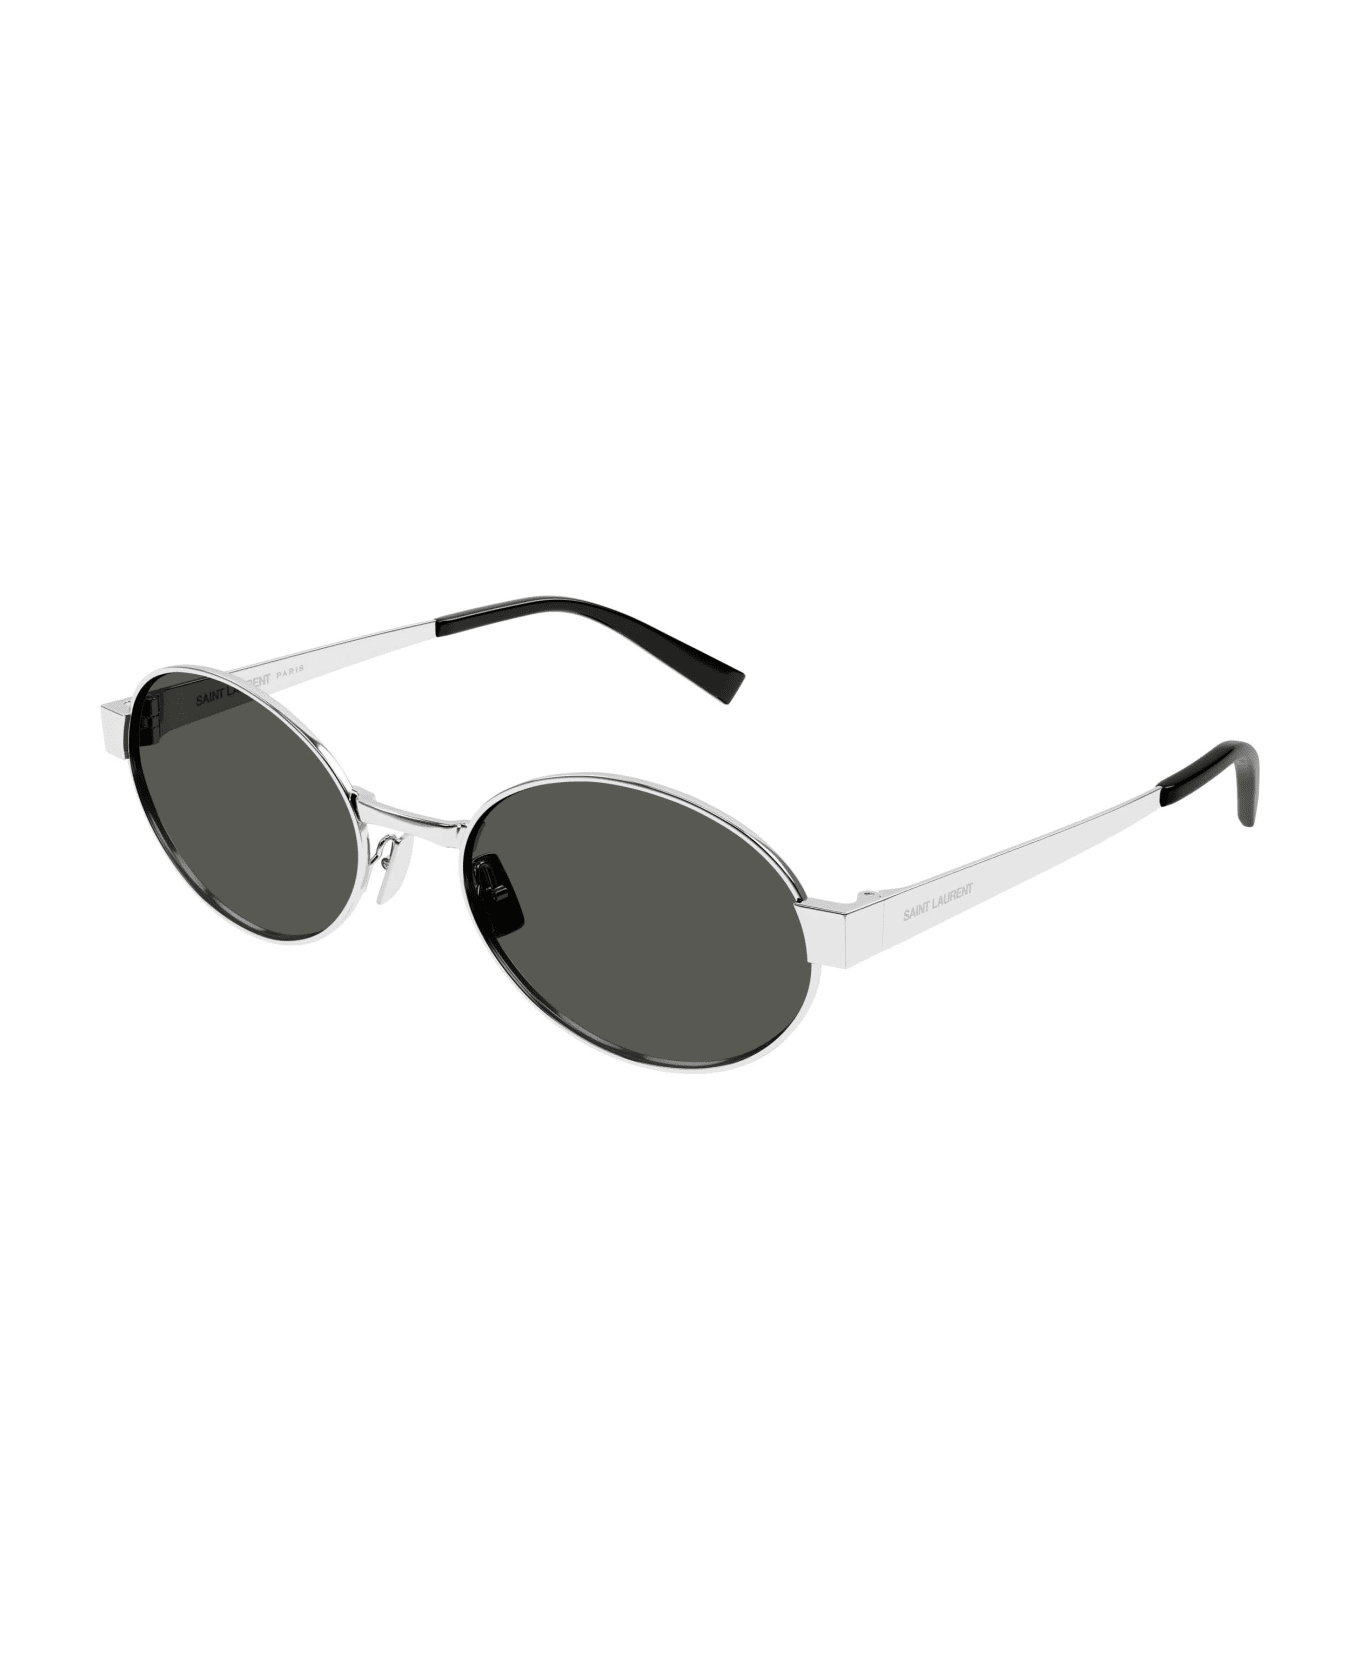 Saint Laurent Eyewear Sunglasses - Silver/Grigio